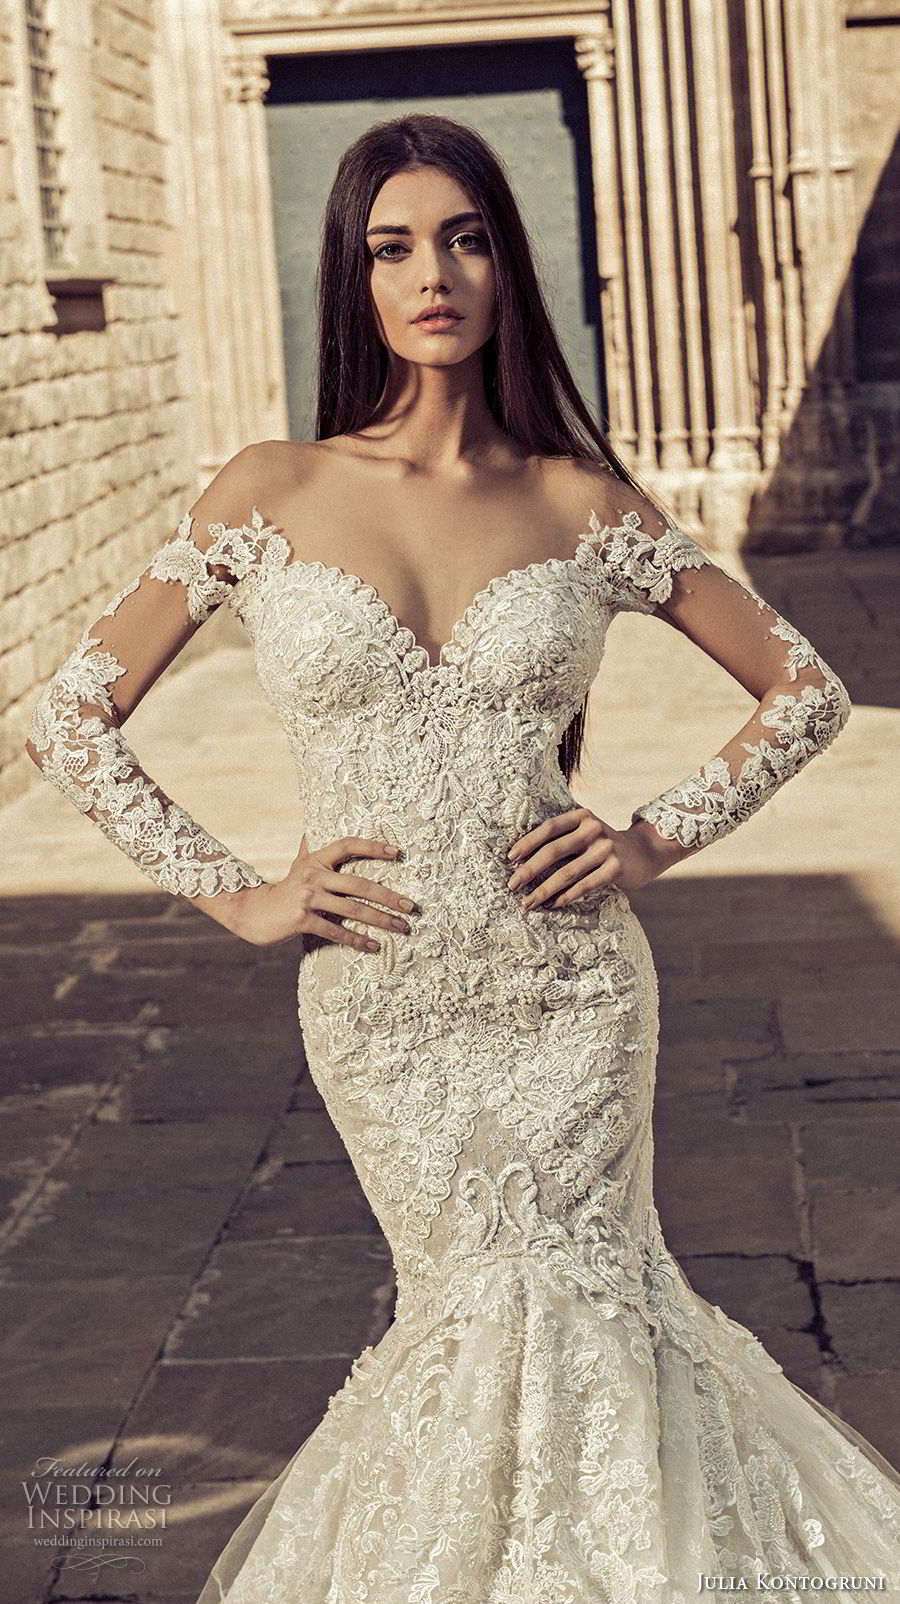 Julia Kontogruni 2018 Wedding Dresses — “Barcelona” Bridal Collection ...